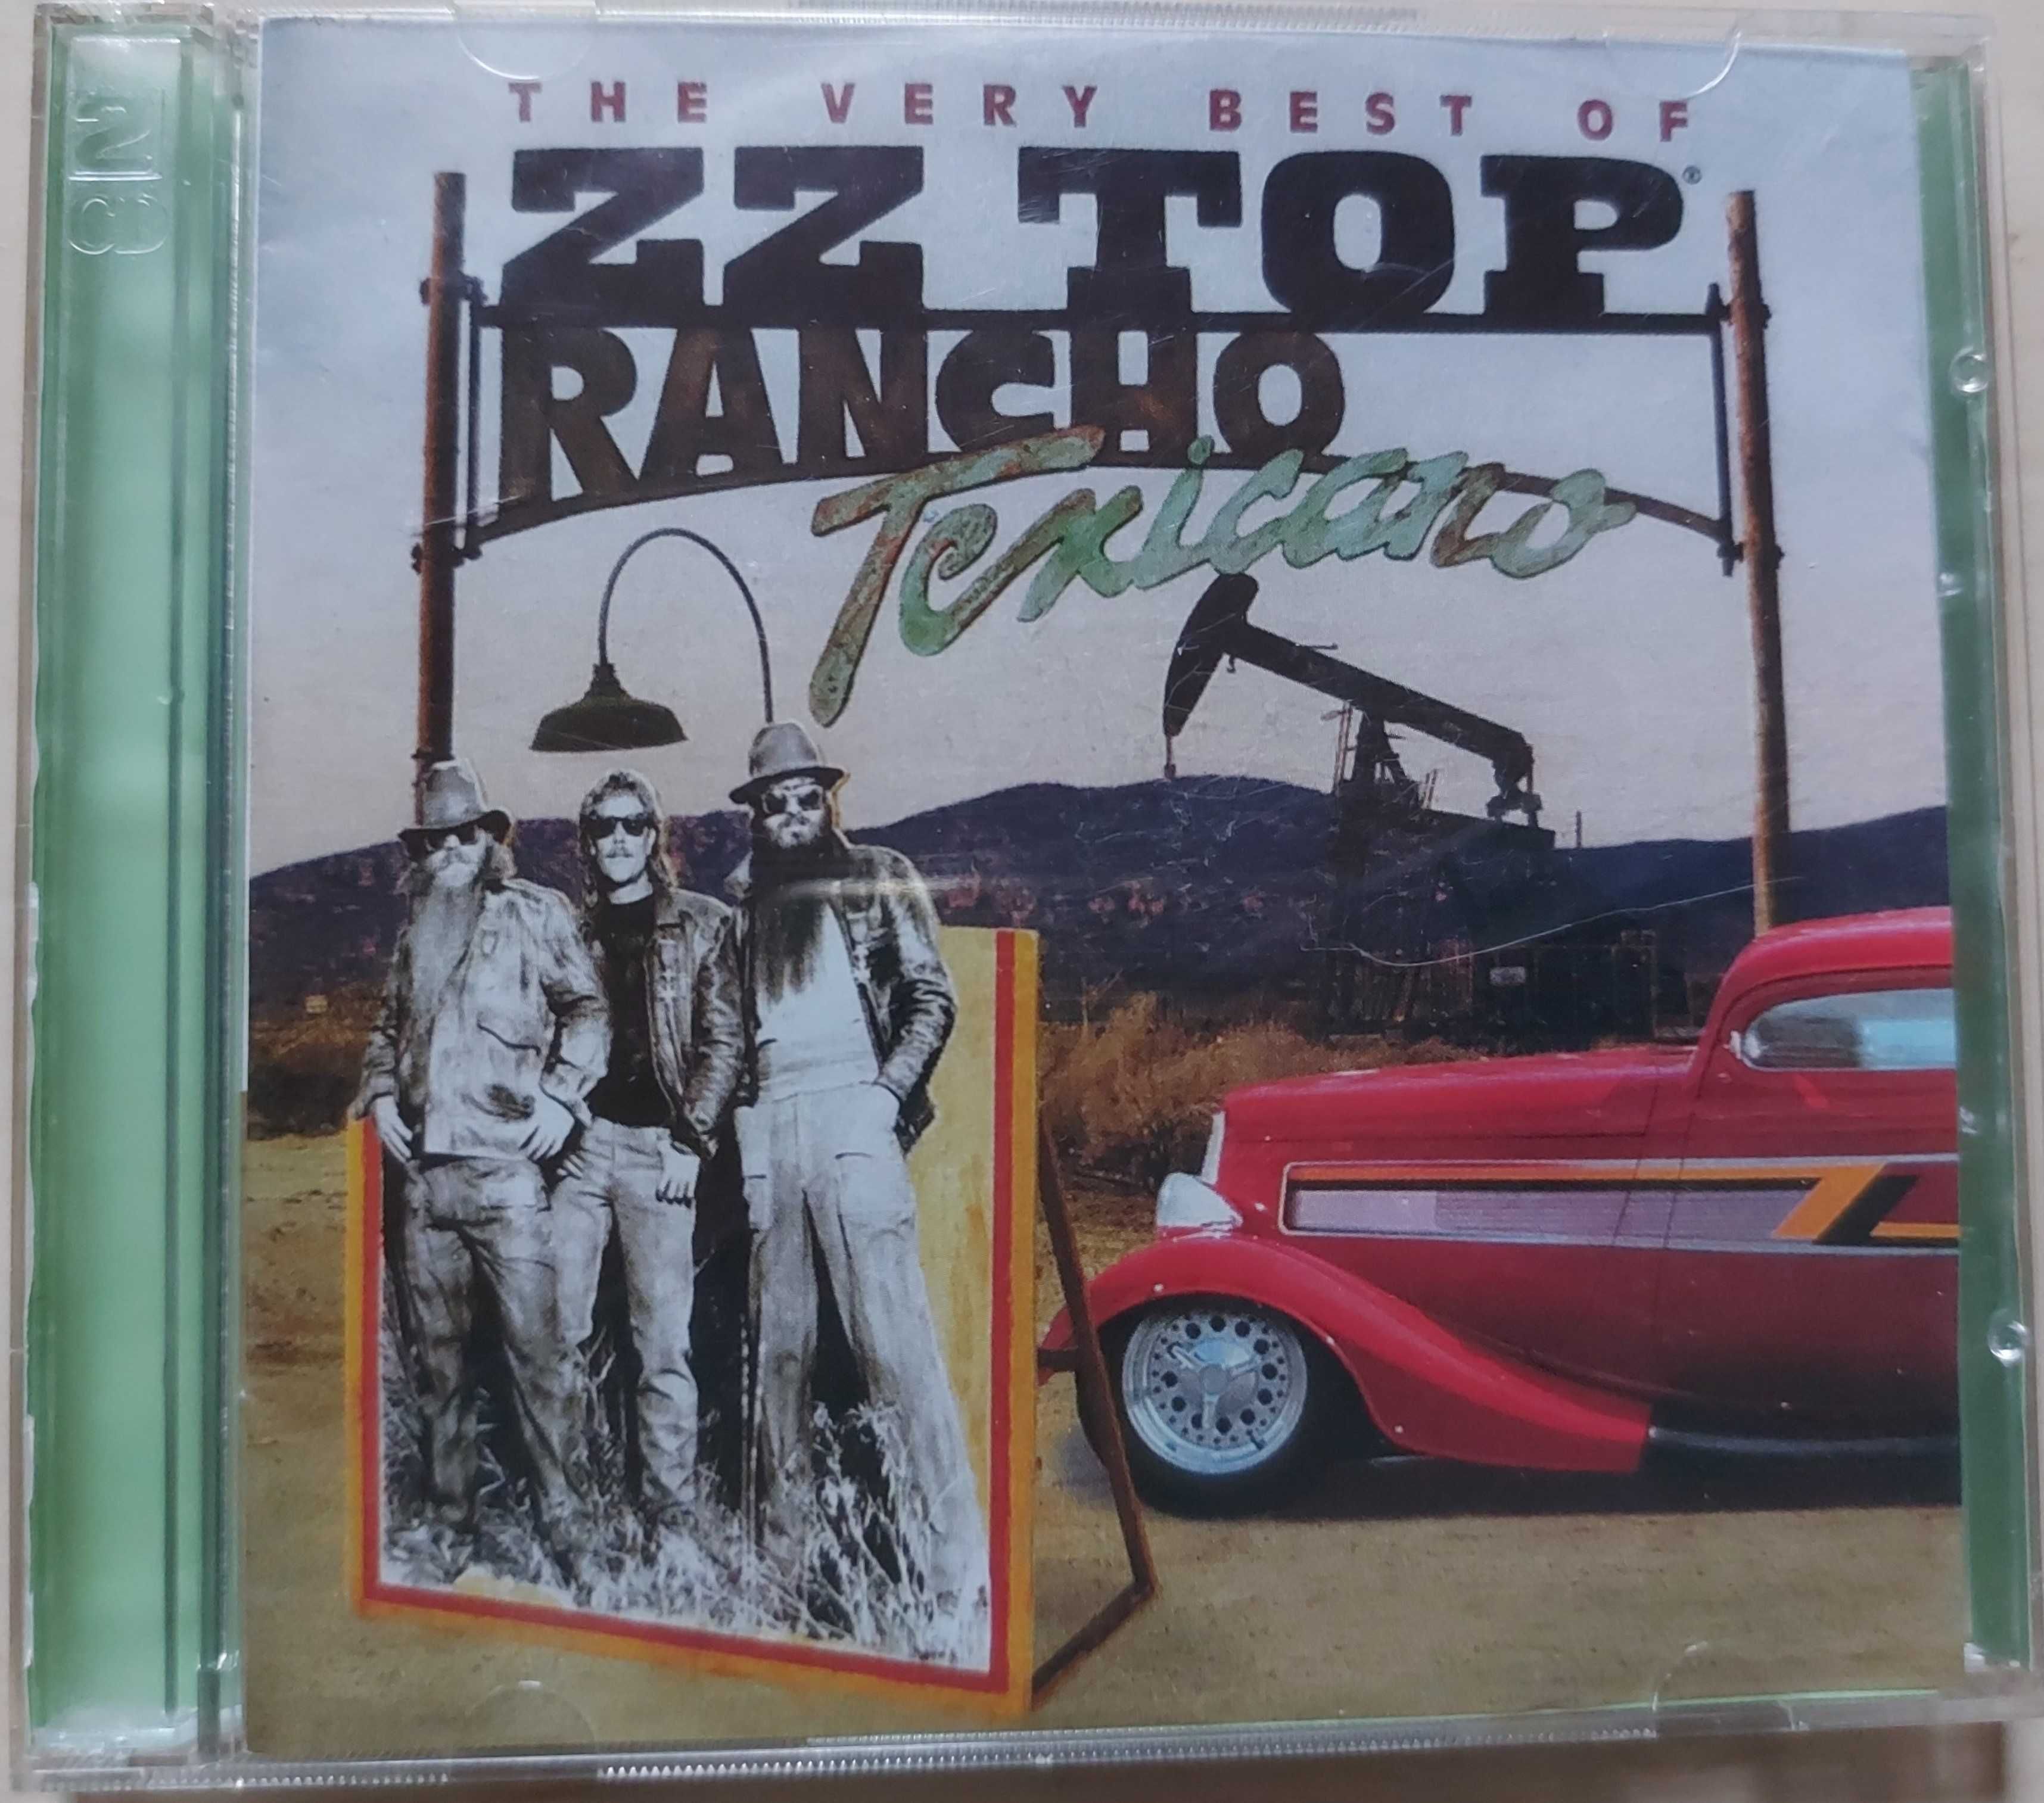 ZZ Top Rancho Texicano: The Very Best Of ZZ Top, podwójne CD